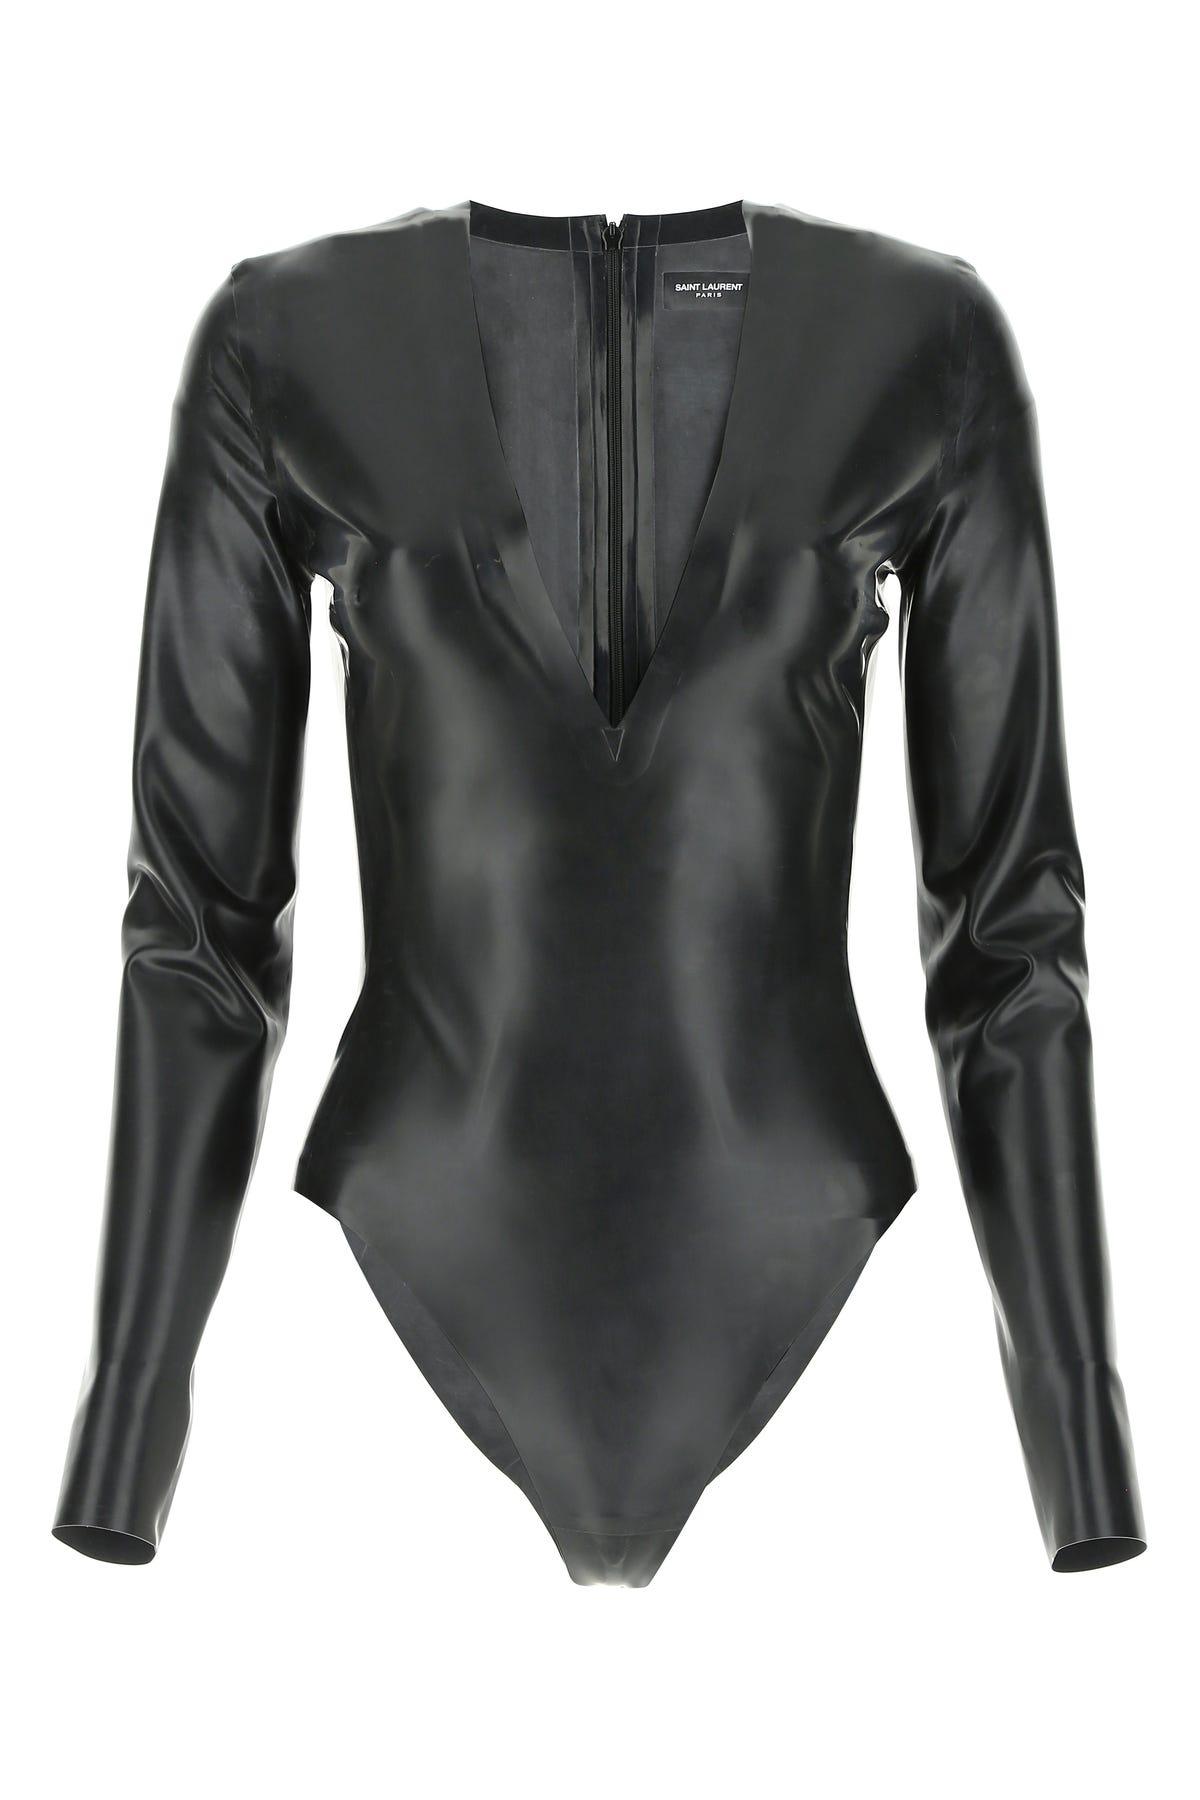 Saint Laurent Long Sleeve Latex Bodycon in Black | Lyst